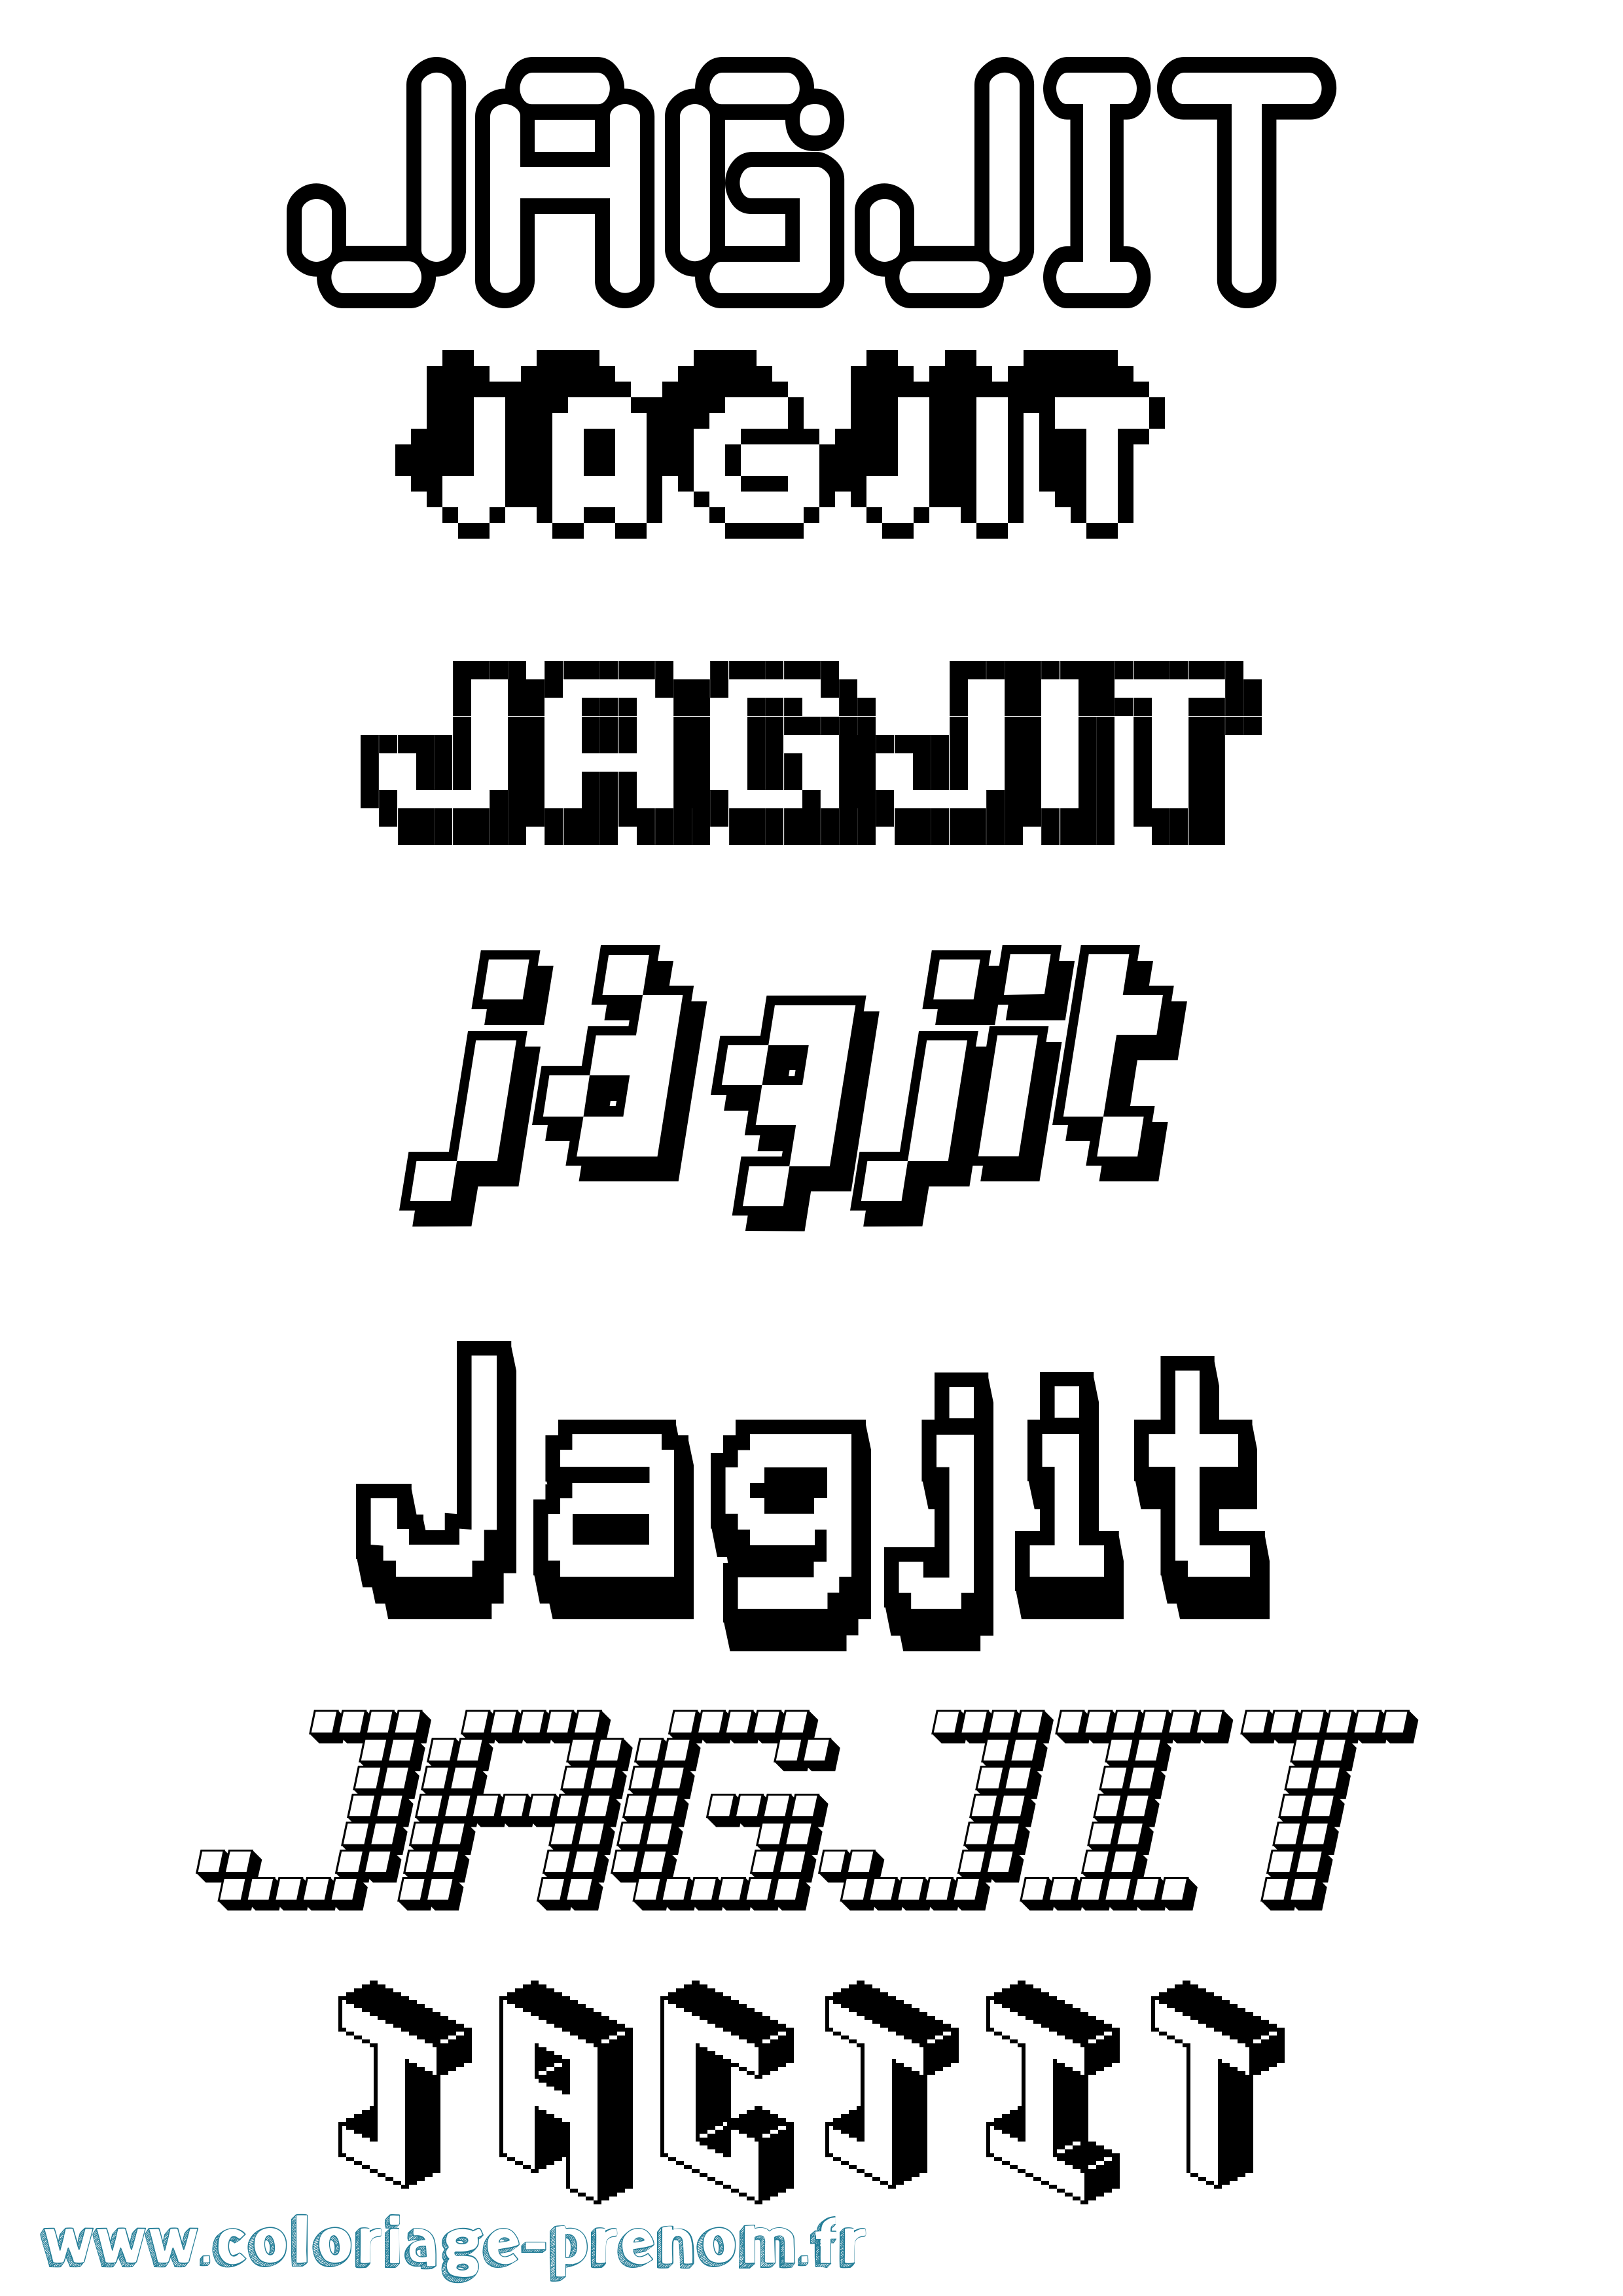 Coloriage prénom Jagjit Pixel